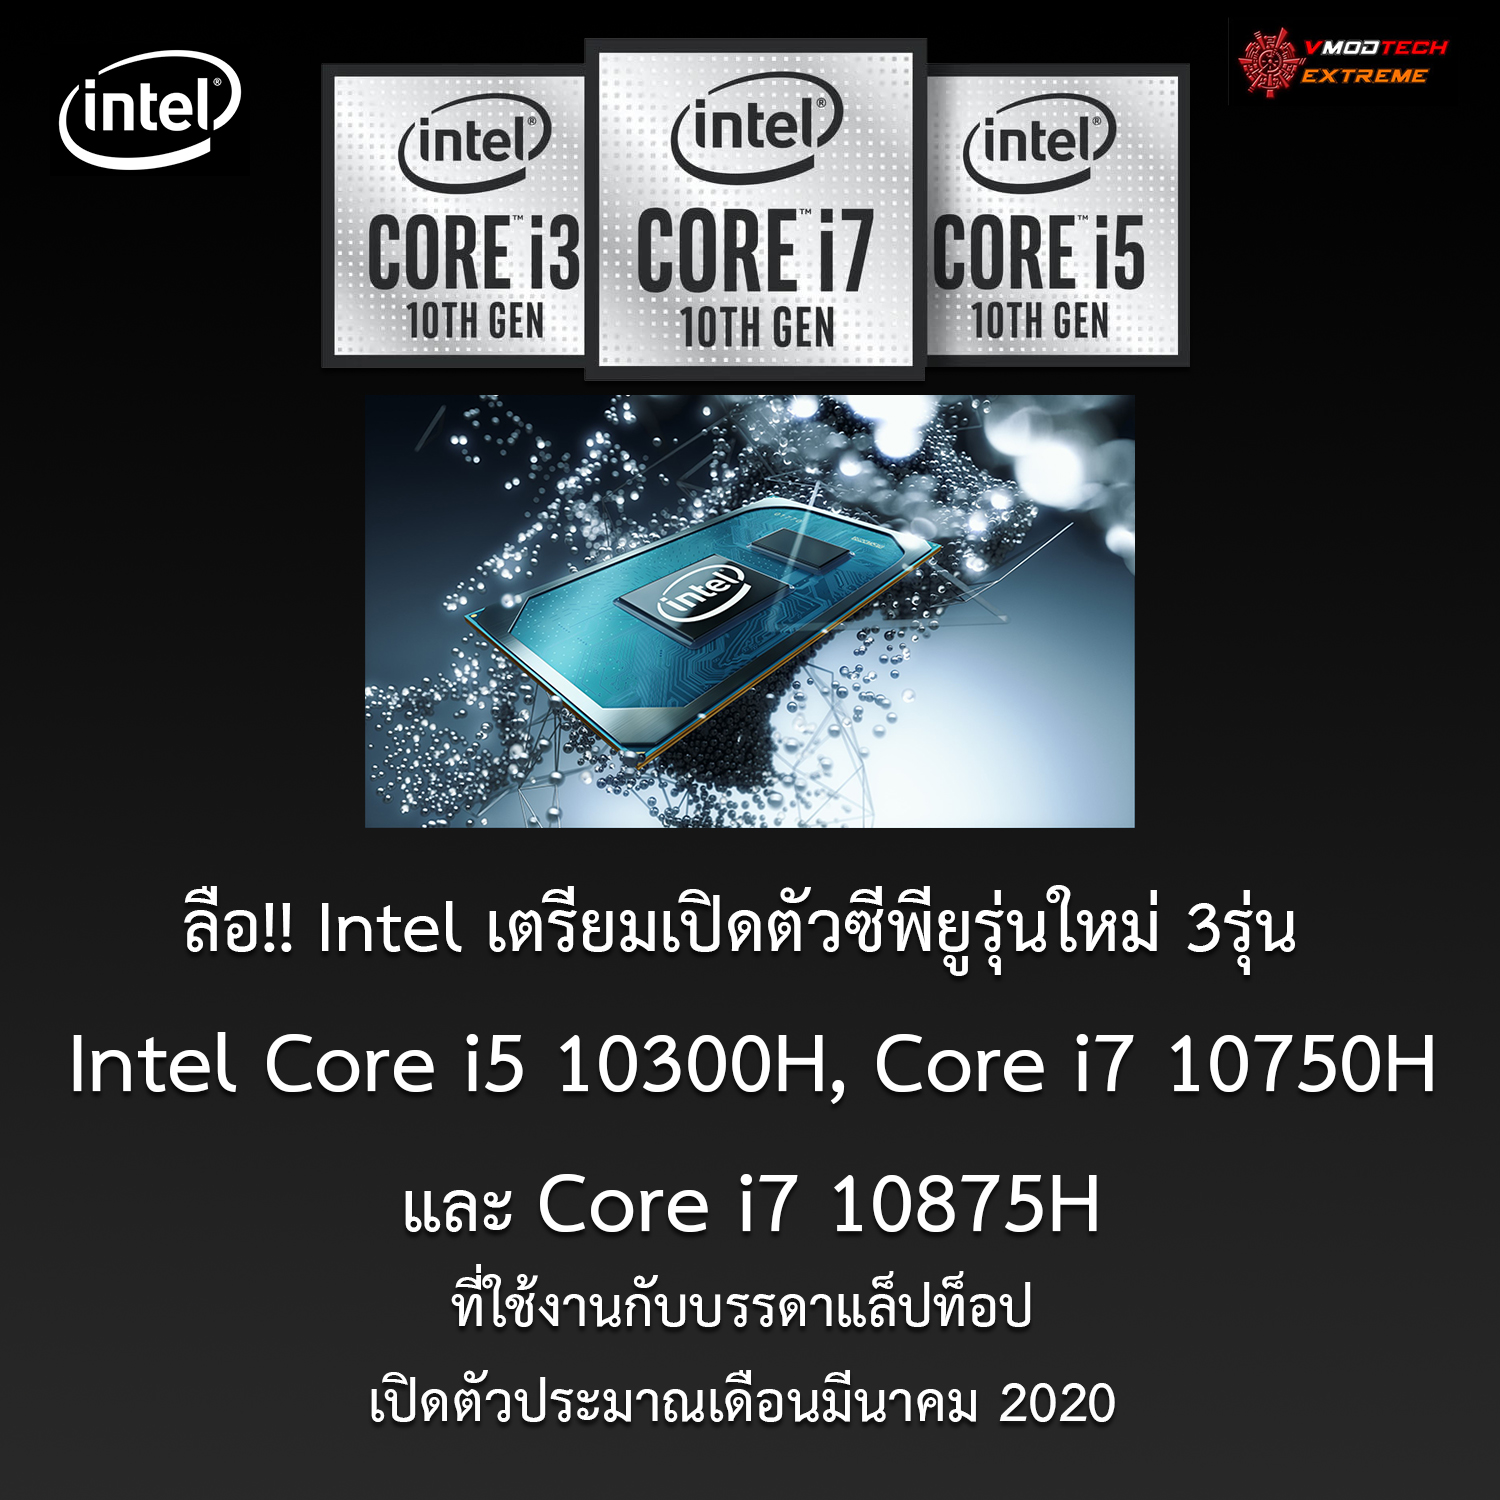 intel 10th gen mobility ลือ!! Intel เตรียมเปิดตัวซีพียูรุ่นใหม่ 3รุ่น 10th Gen Mobility ในรุ่น Intel Core i5 10300H, Core i7 10750H และ Core i7 10875H ประมาณเดือนมีนาคม 2020 